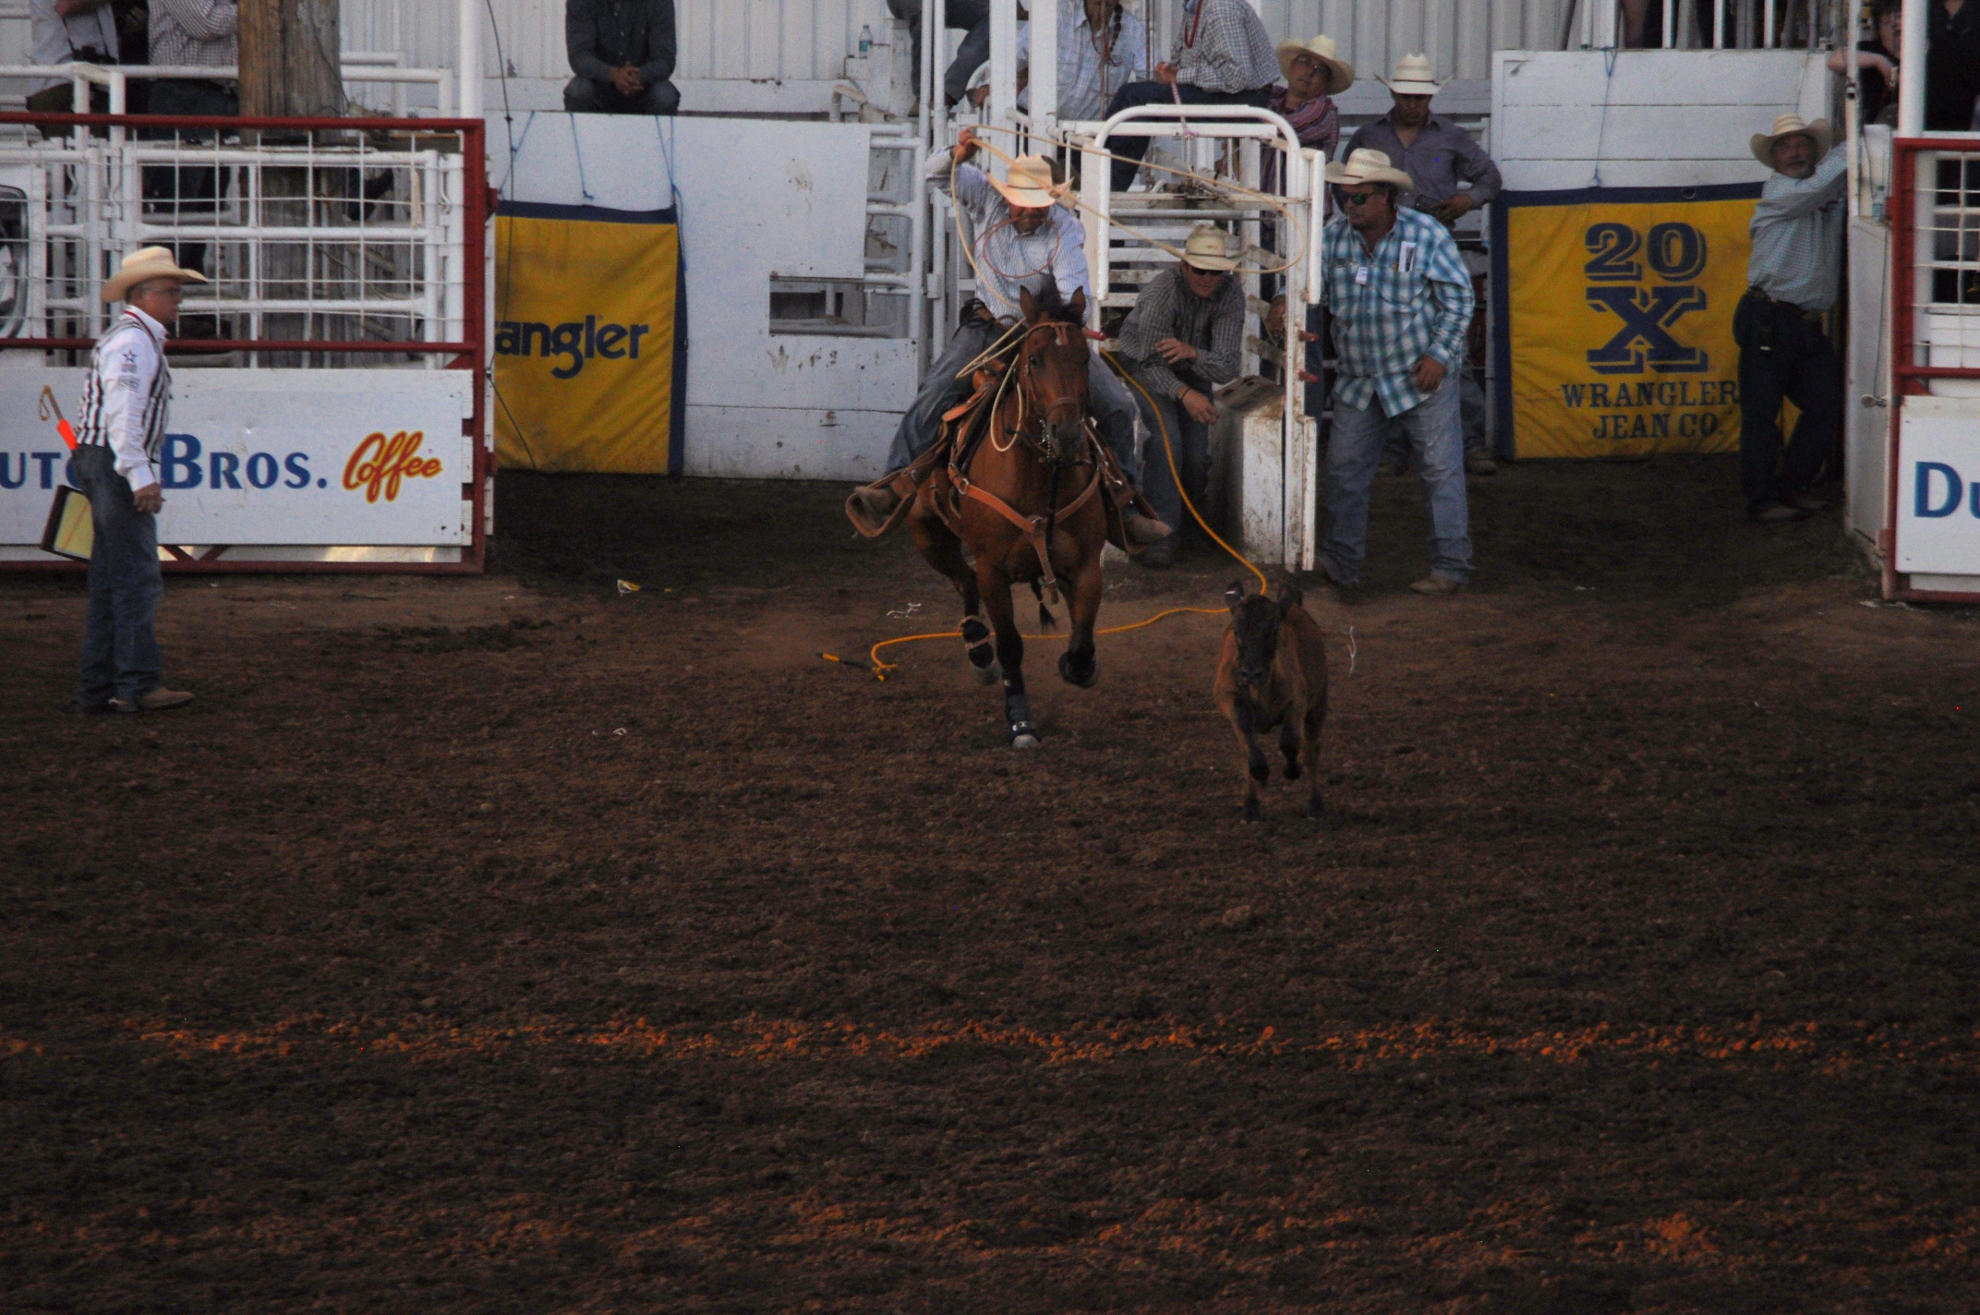 Cowboy on horse swinging lasso behind calf